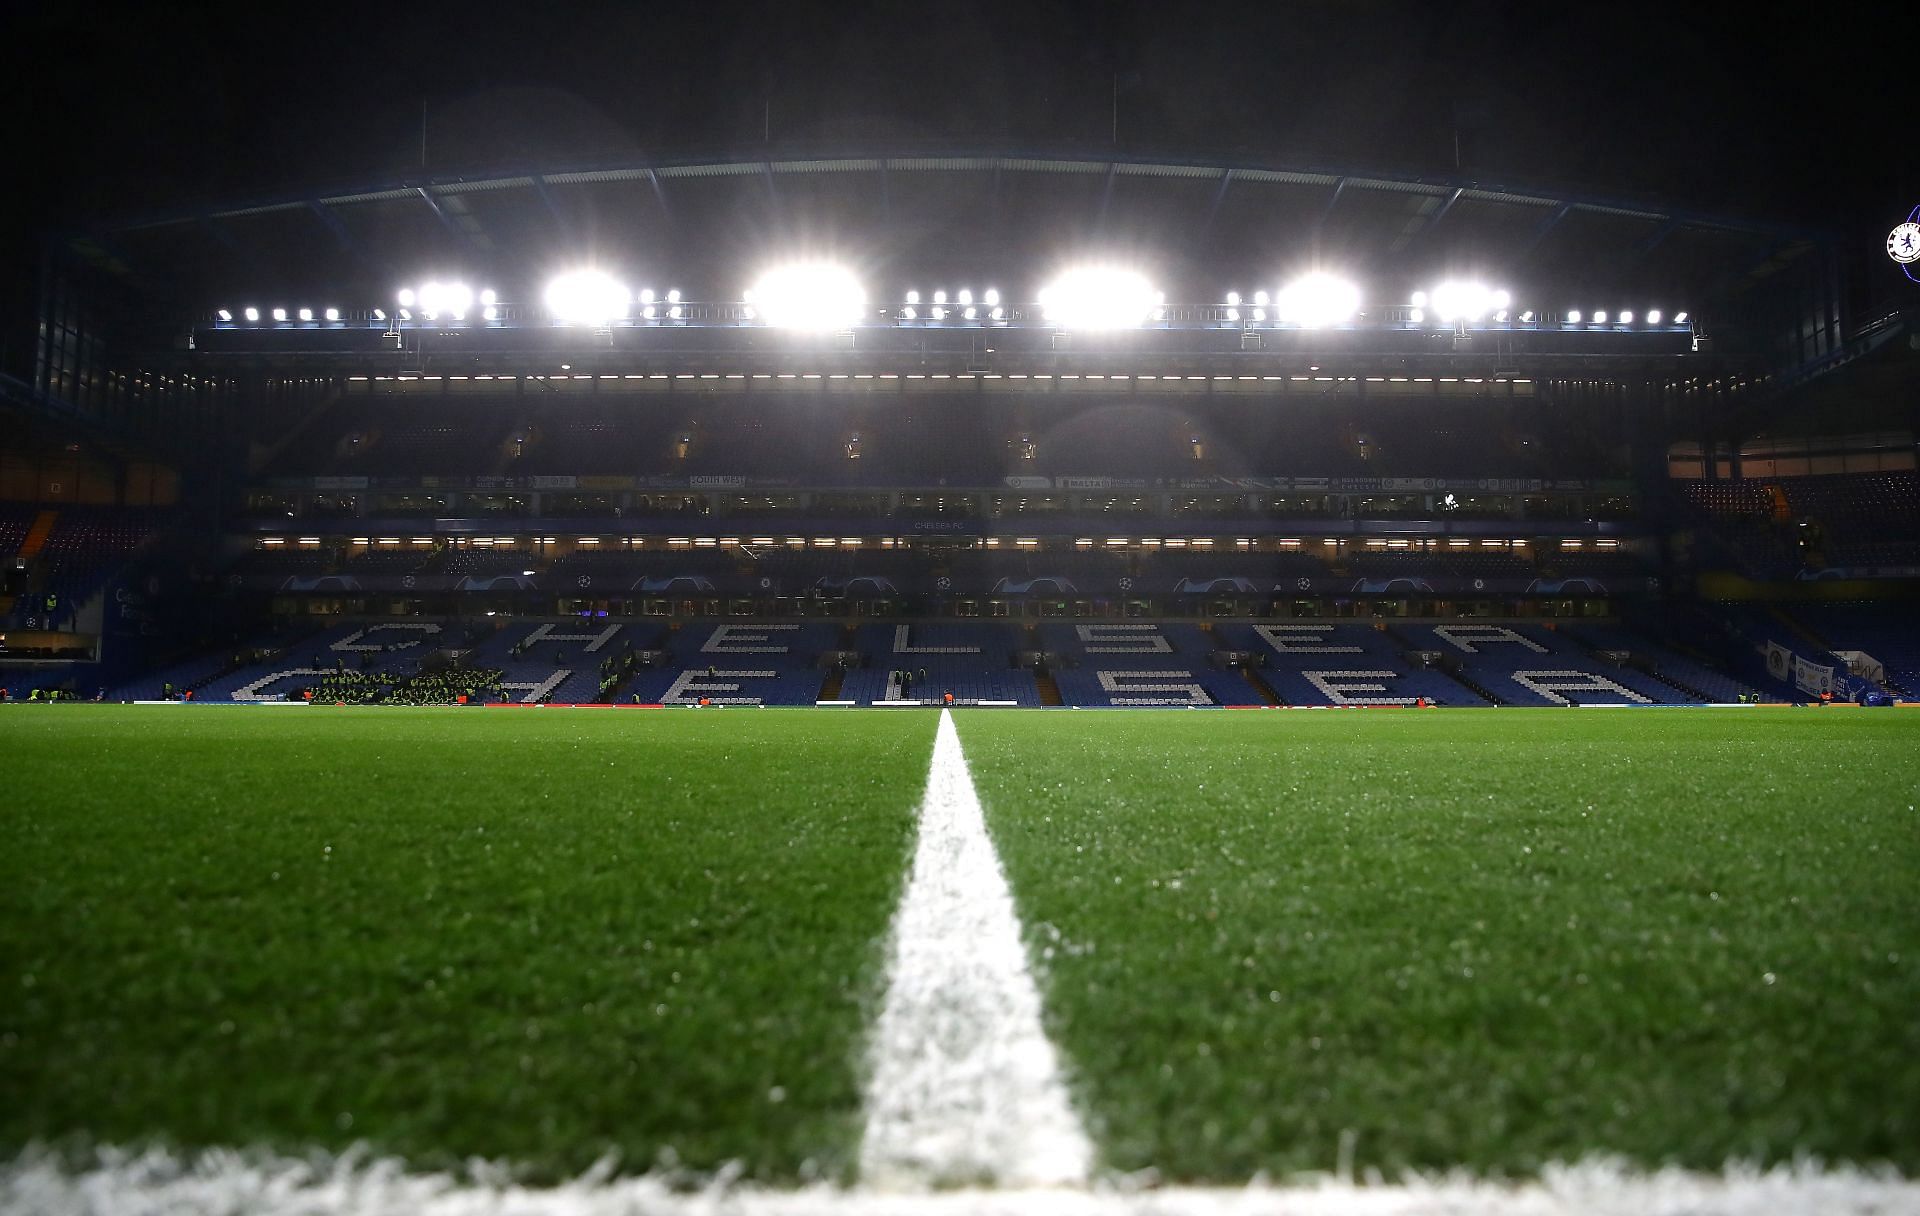 Chelsea Football Club - Stamford Bridge pitch